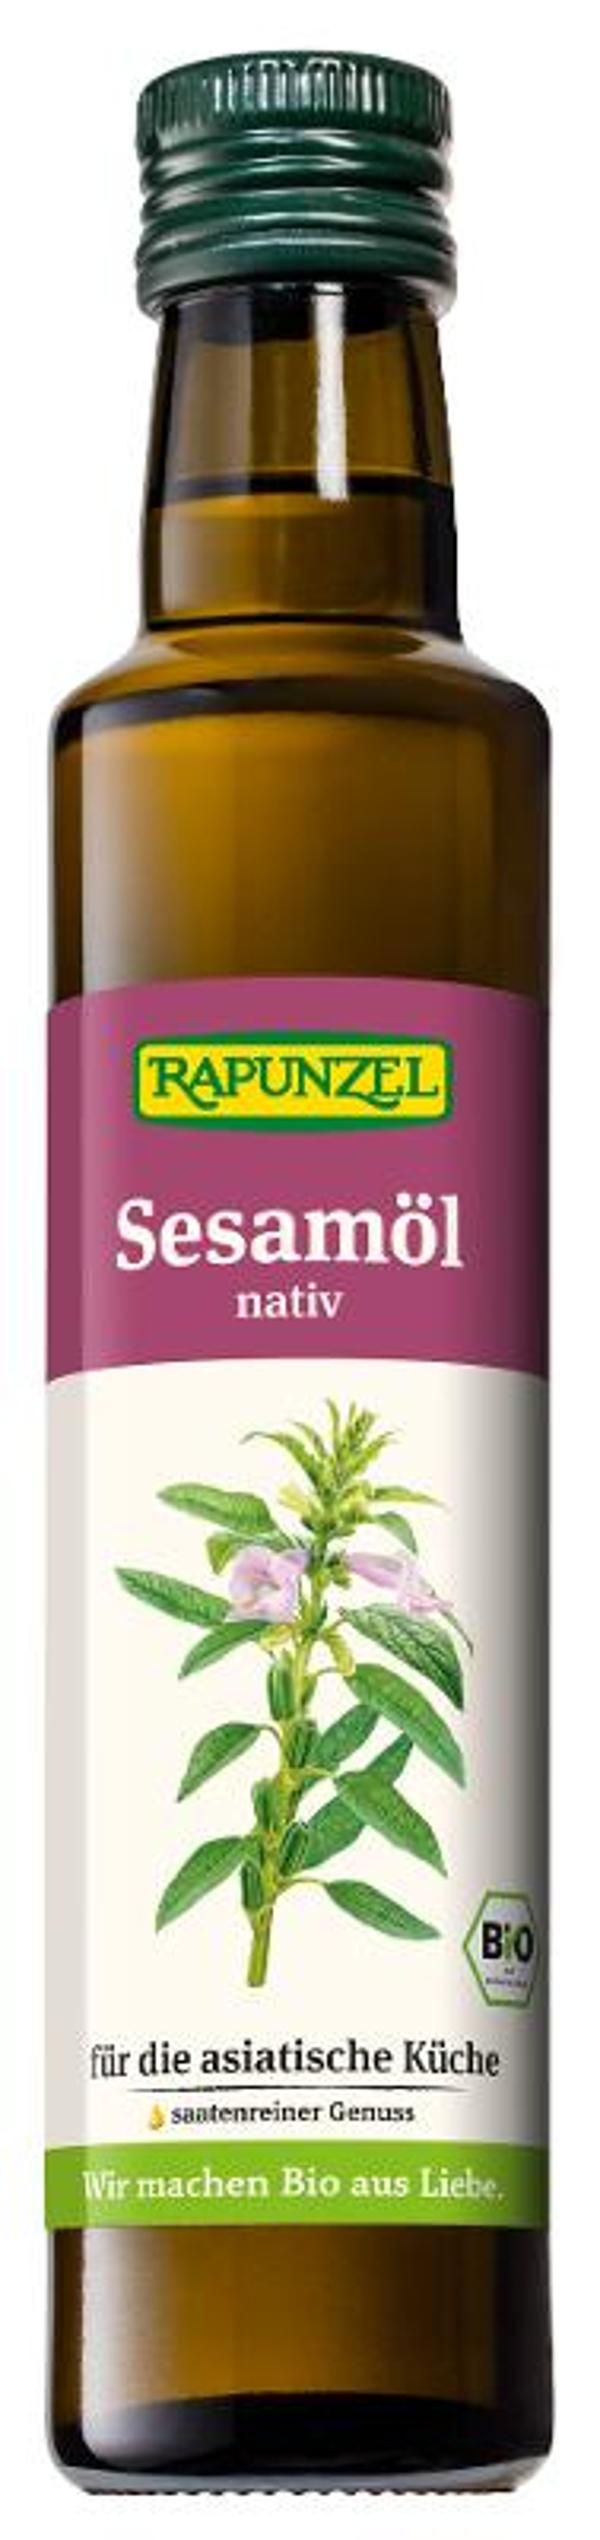 Produktfoto zu Rapunzel Sesamöl nativ - 250ml